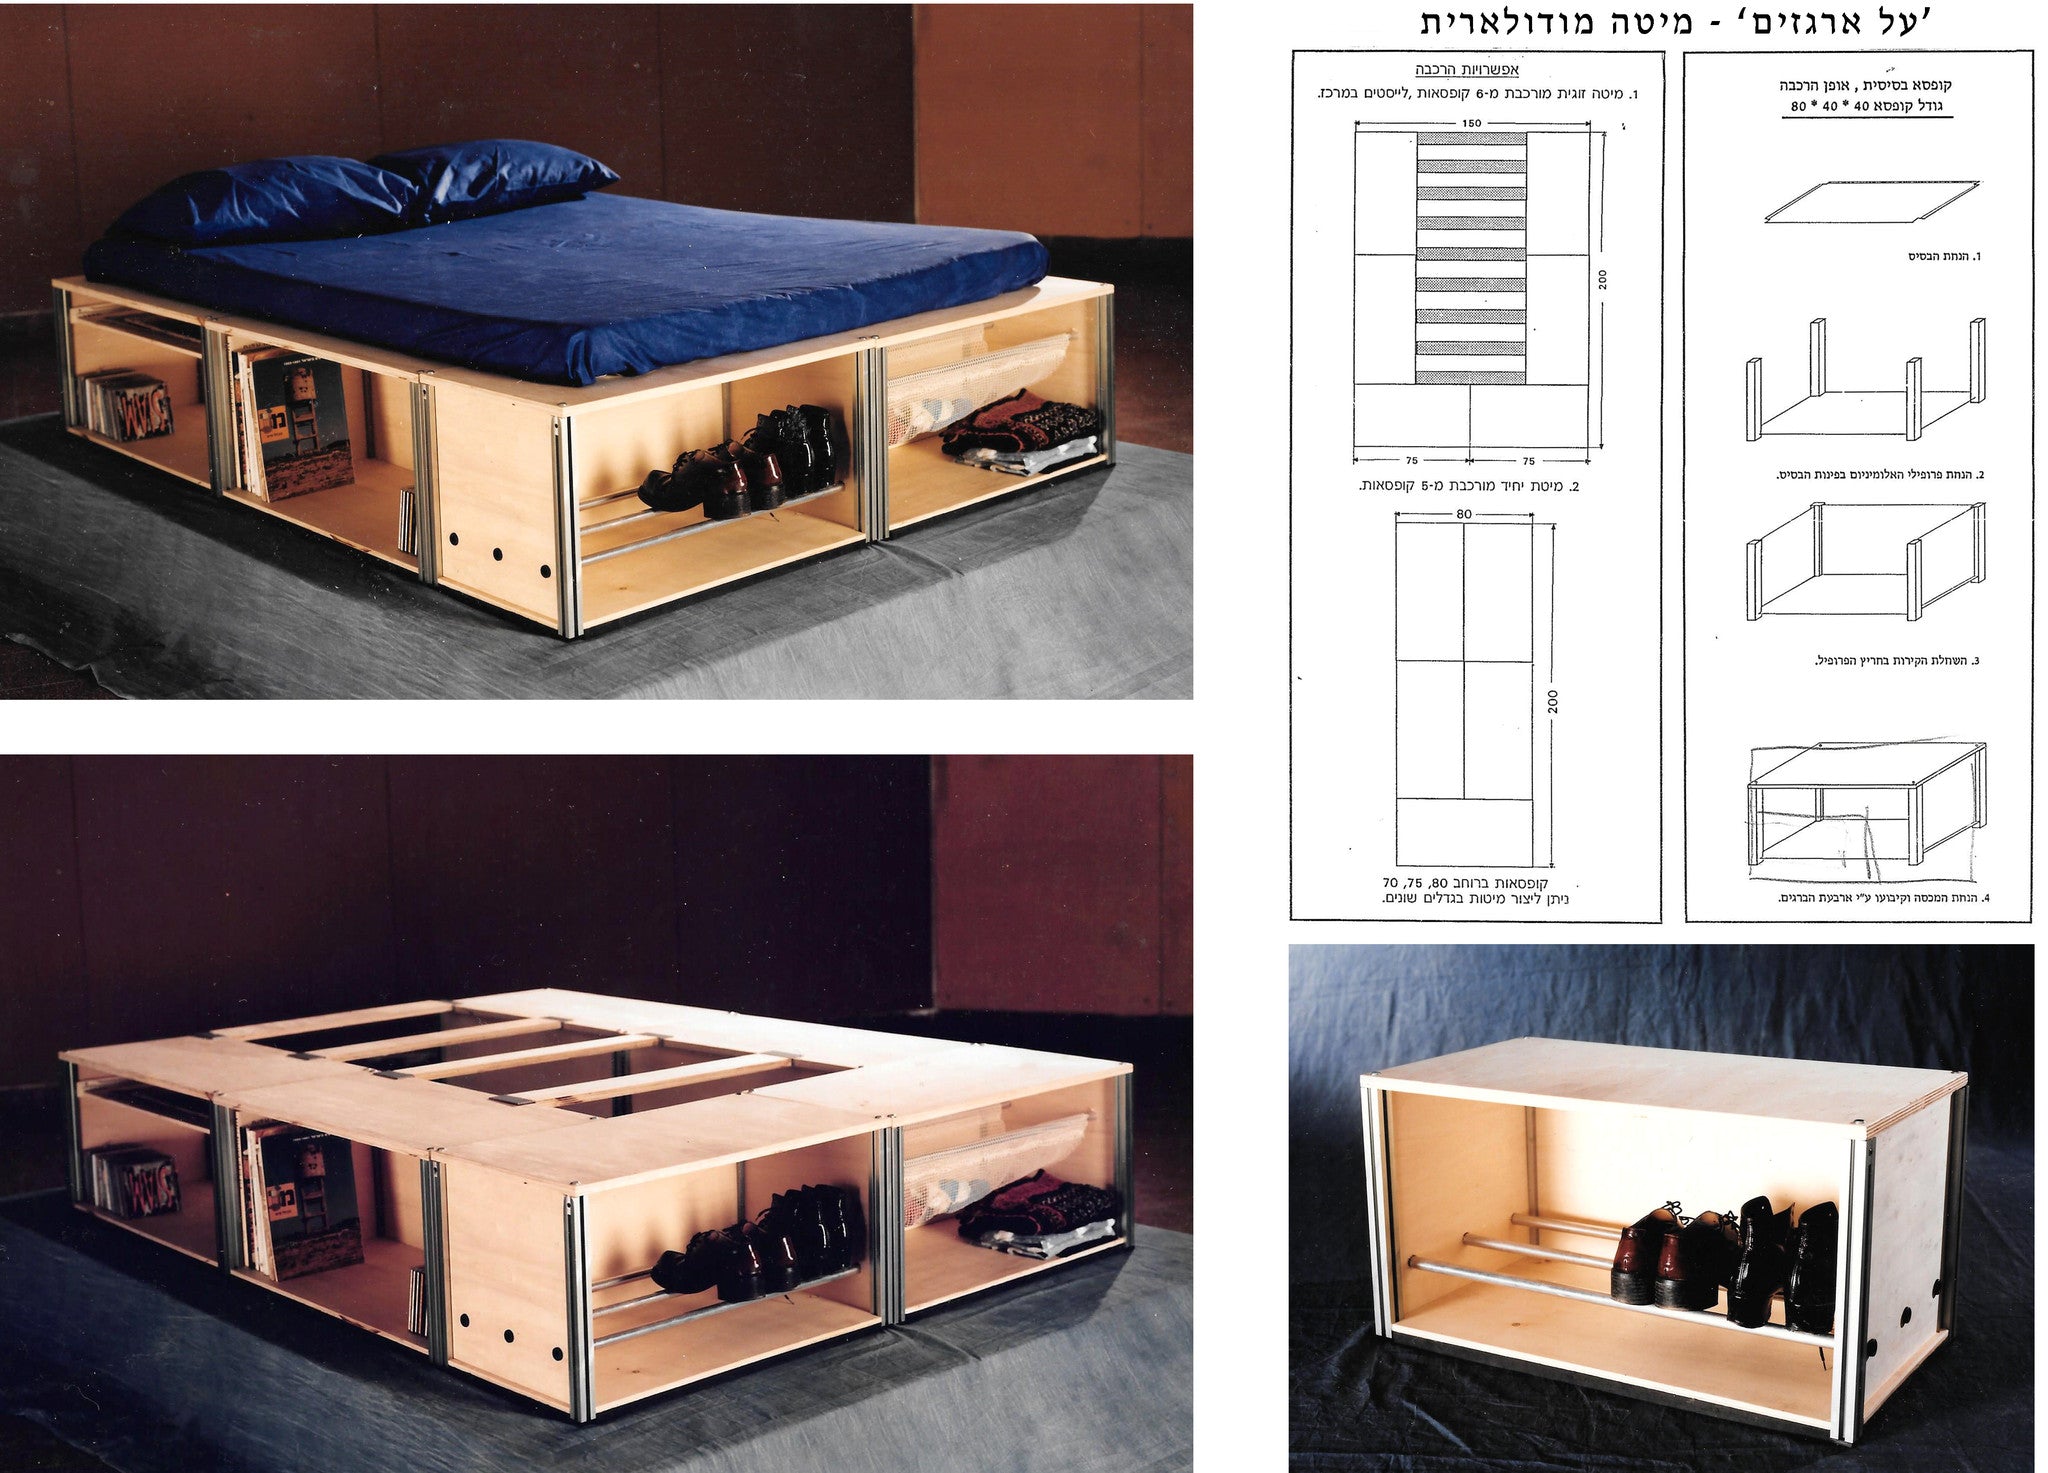 Modular bed design by Hadas Kruk